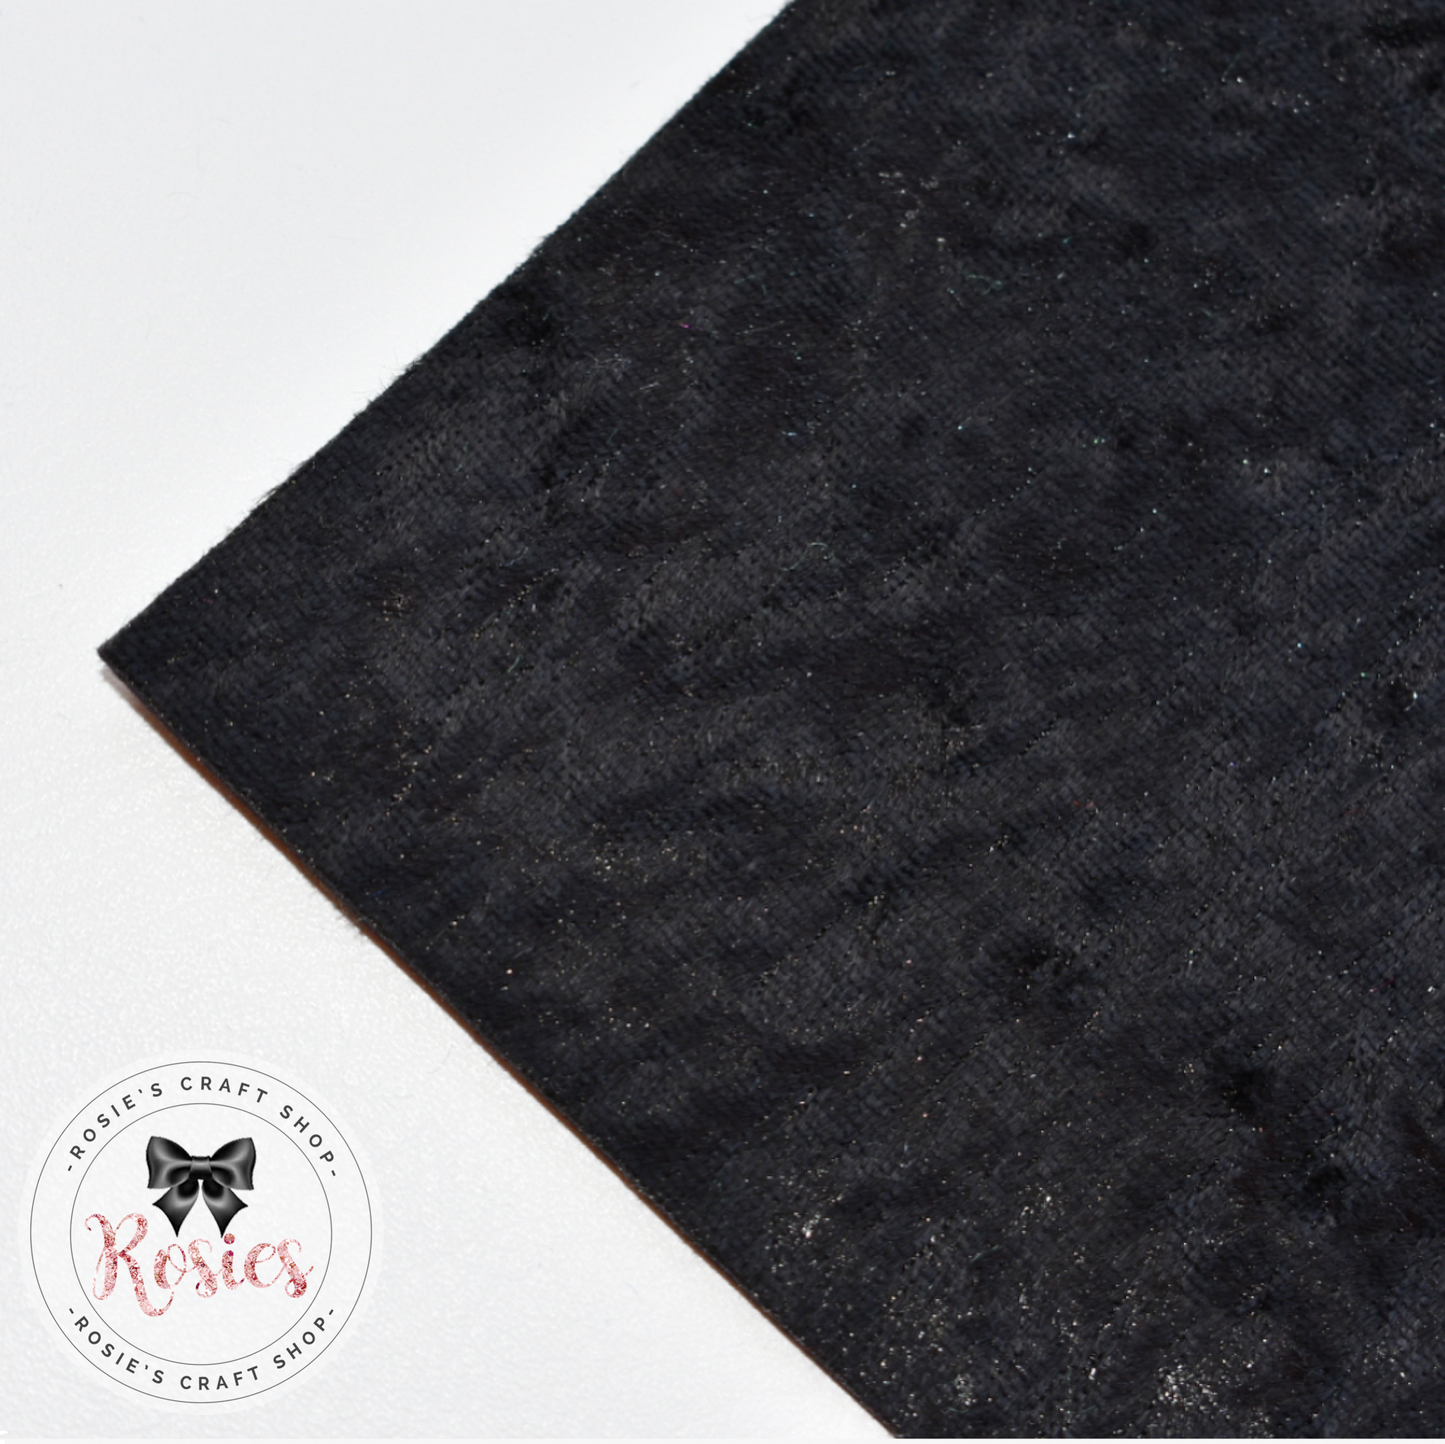 Black Crushed Velvet Fabric Felt - Rosie's Craft Shop Ltd